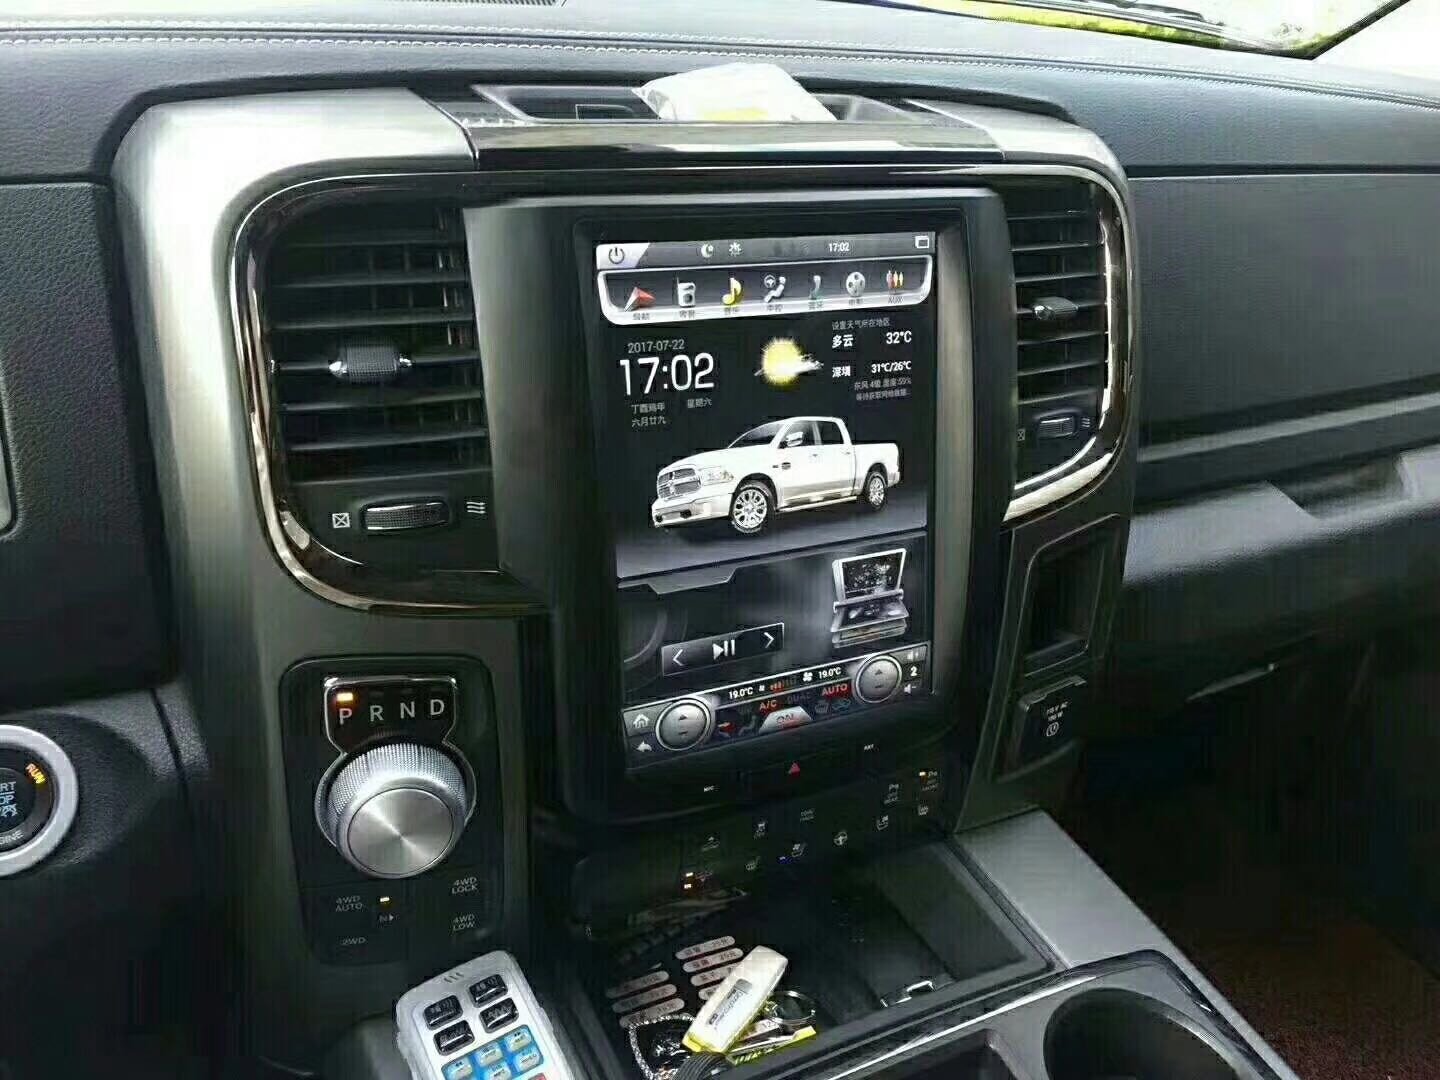 [Open box] 10.4" Android Vertical Screen 3 button Navi Radio for Dodge Ram 2013 - 2018-Phoenix Automotive